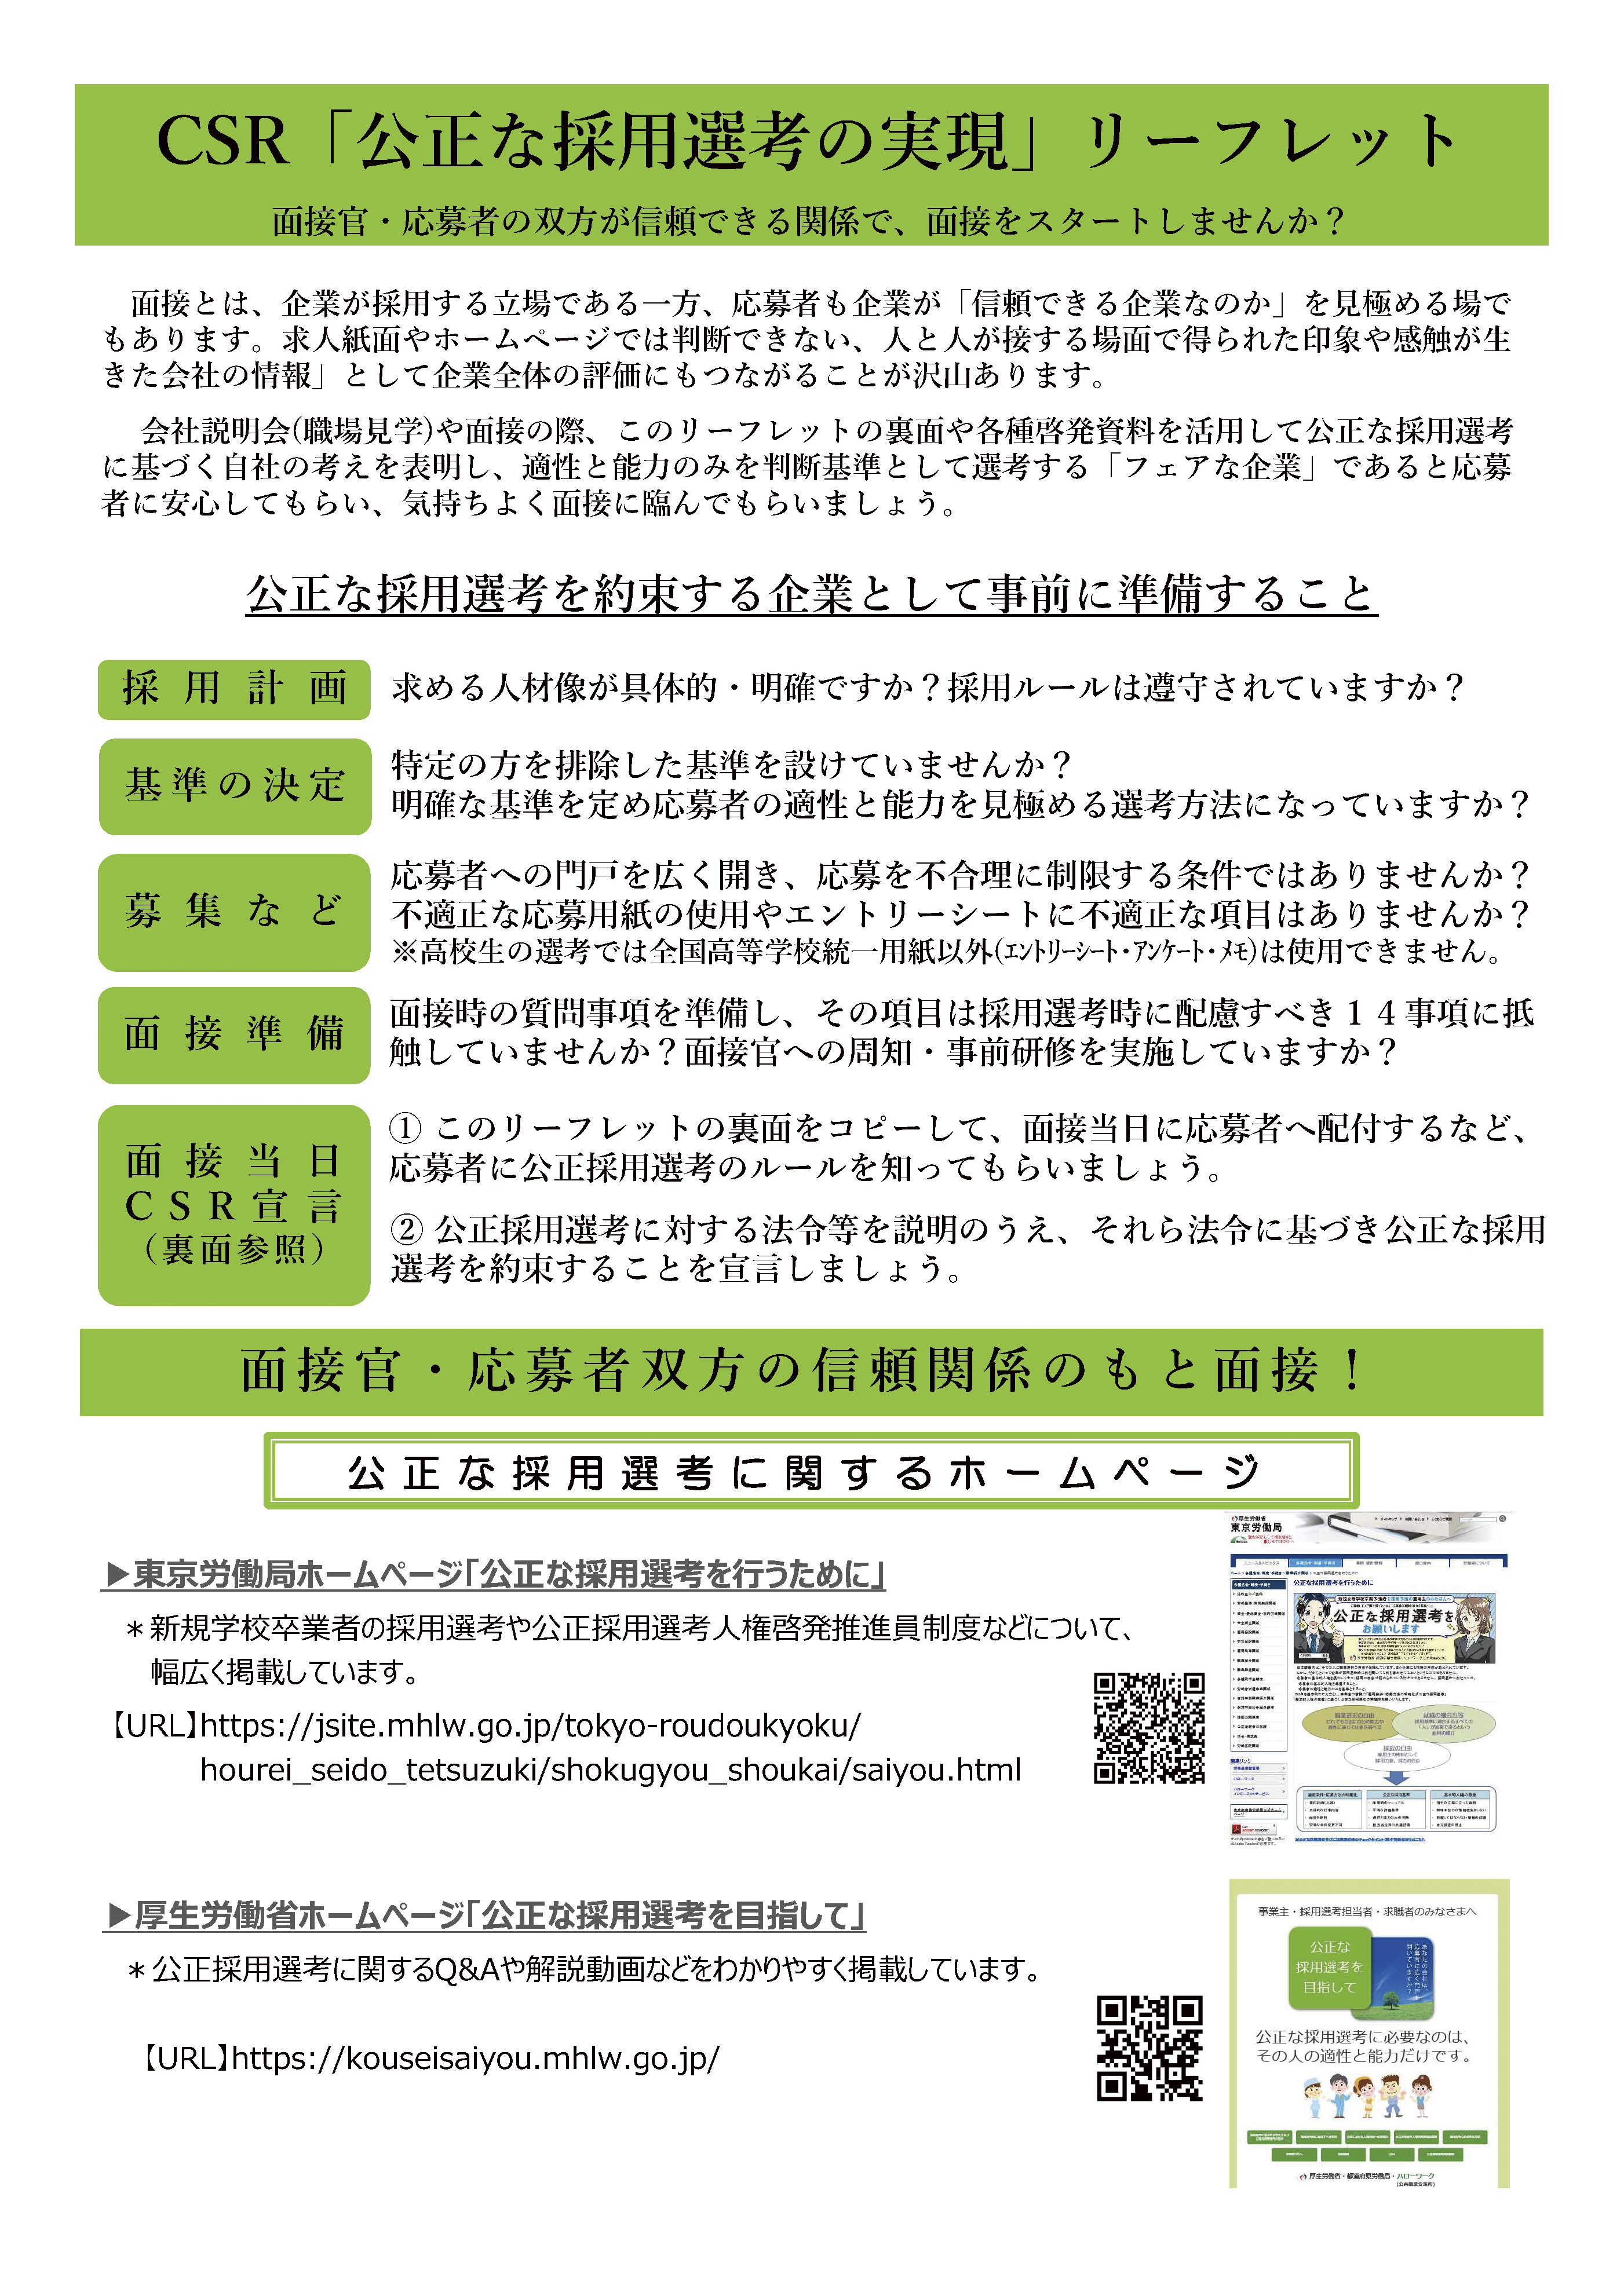 CSR公正な採用選考の実現リーフレット（東京労働局 発行）